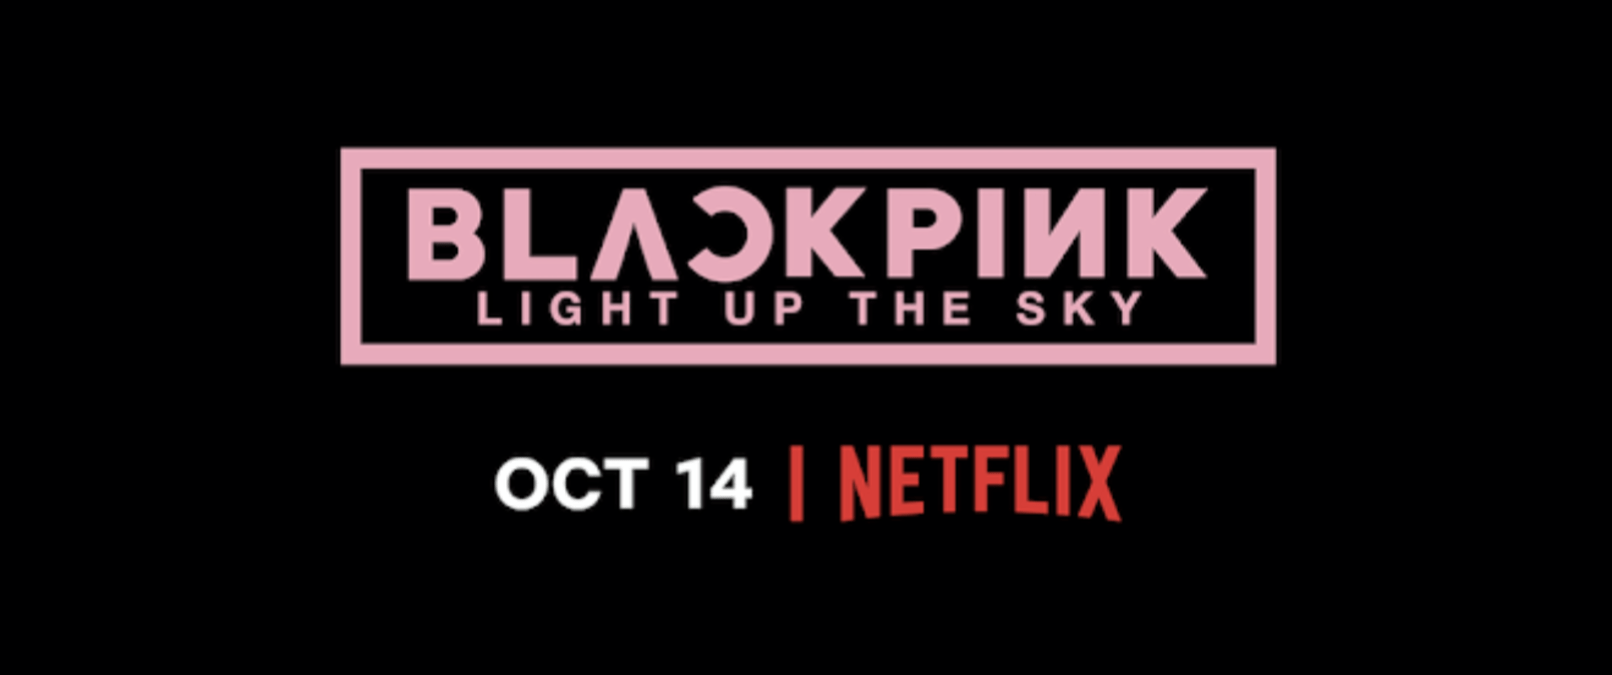 Blackpink Light Up the Sky Review